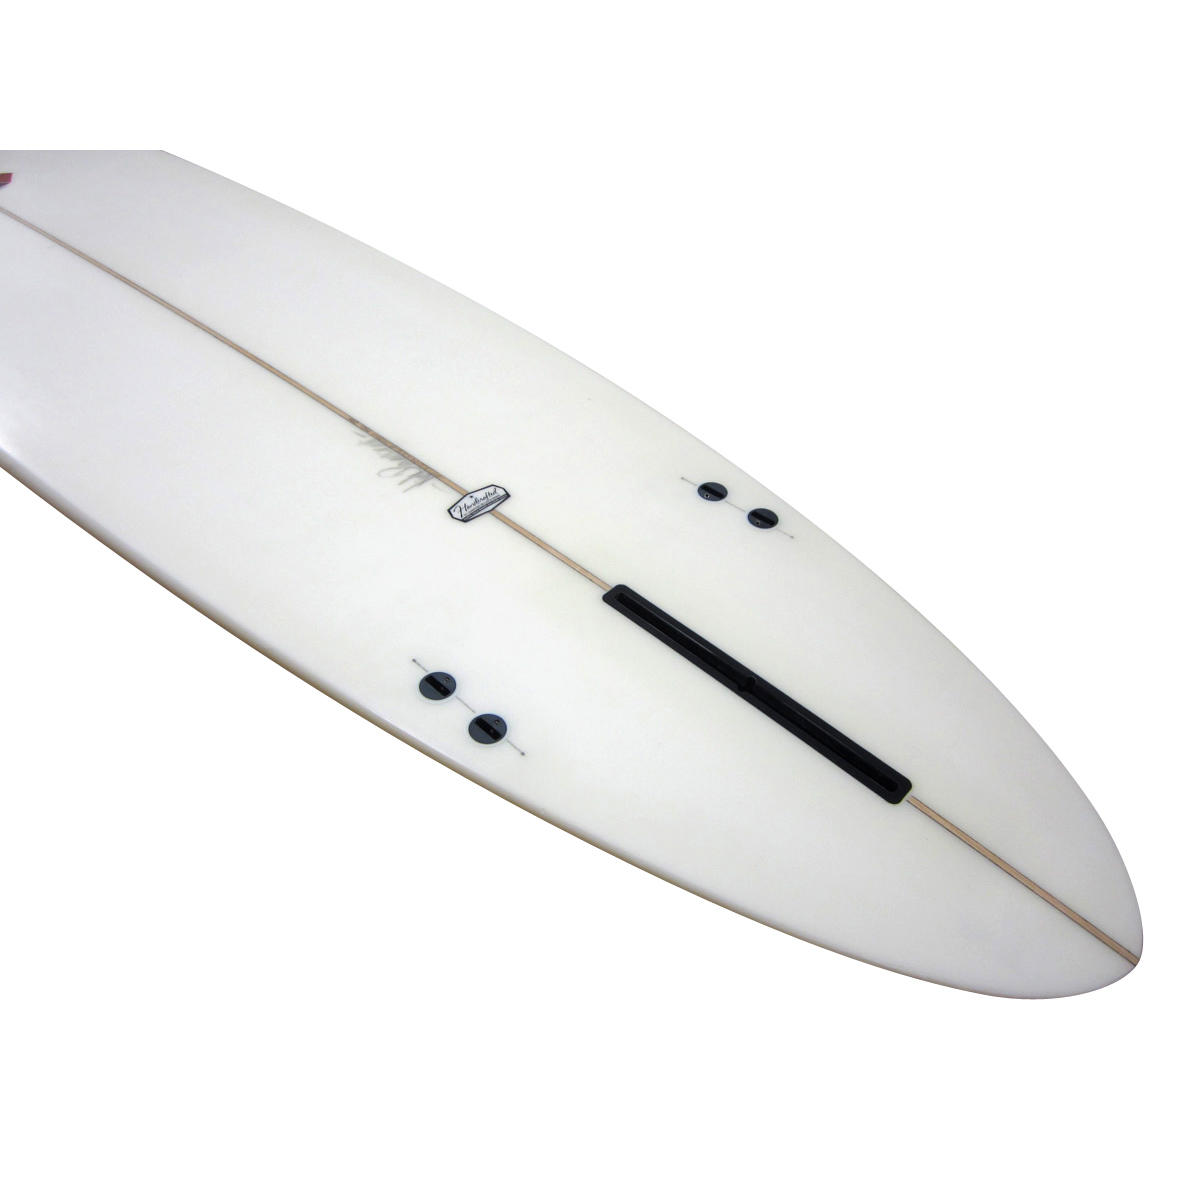 SOURCE SURFBOARDS / Custom 9`1 Performance Shaped By Nick Palandrani